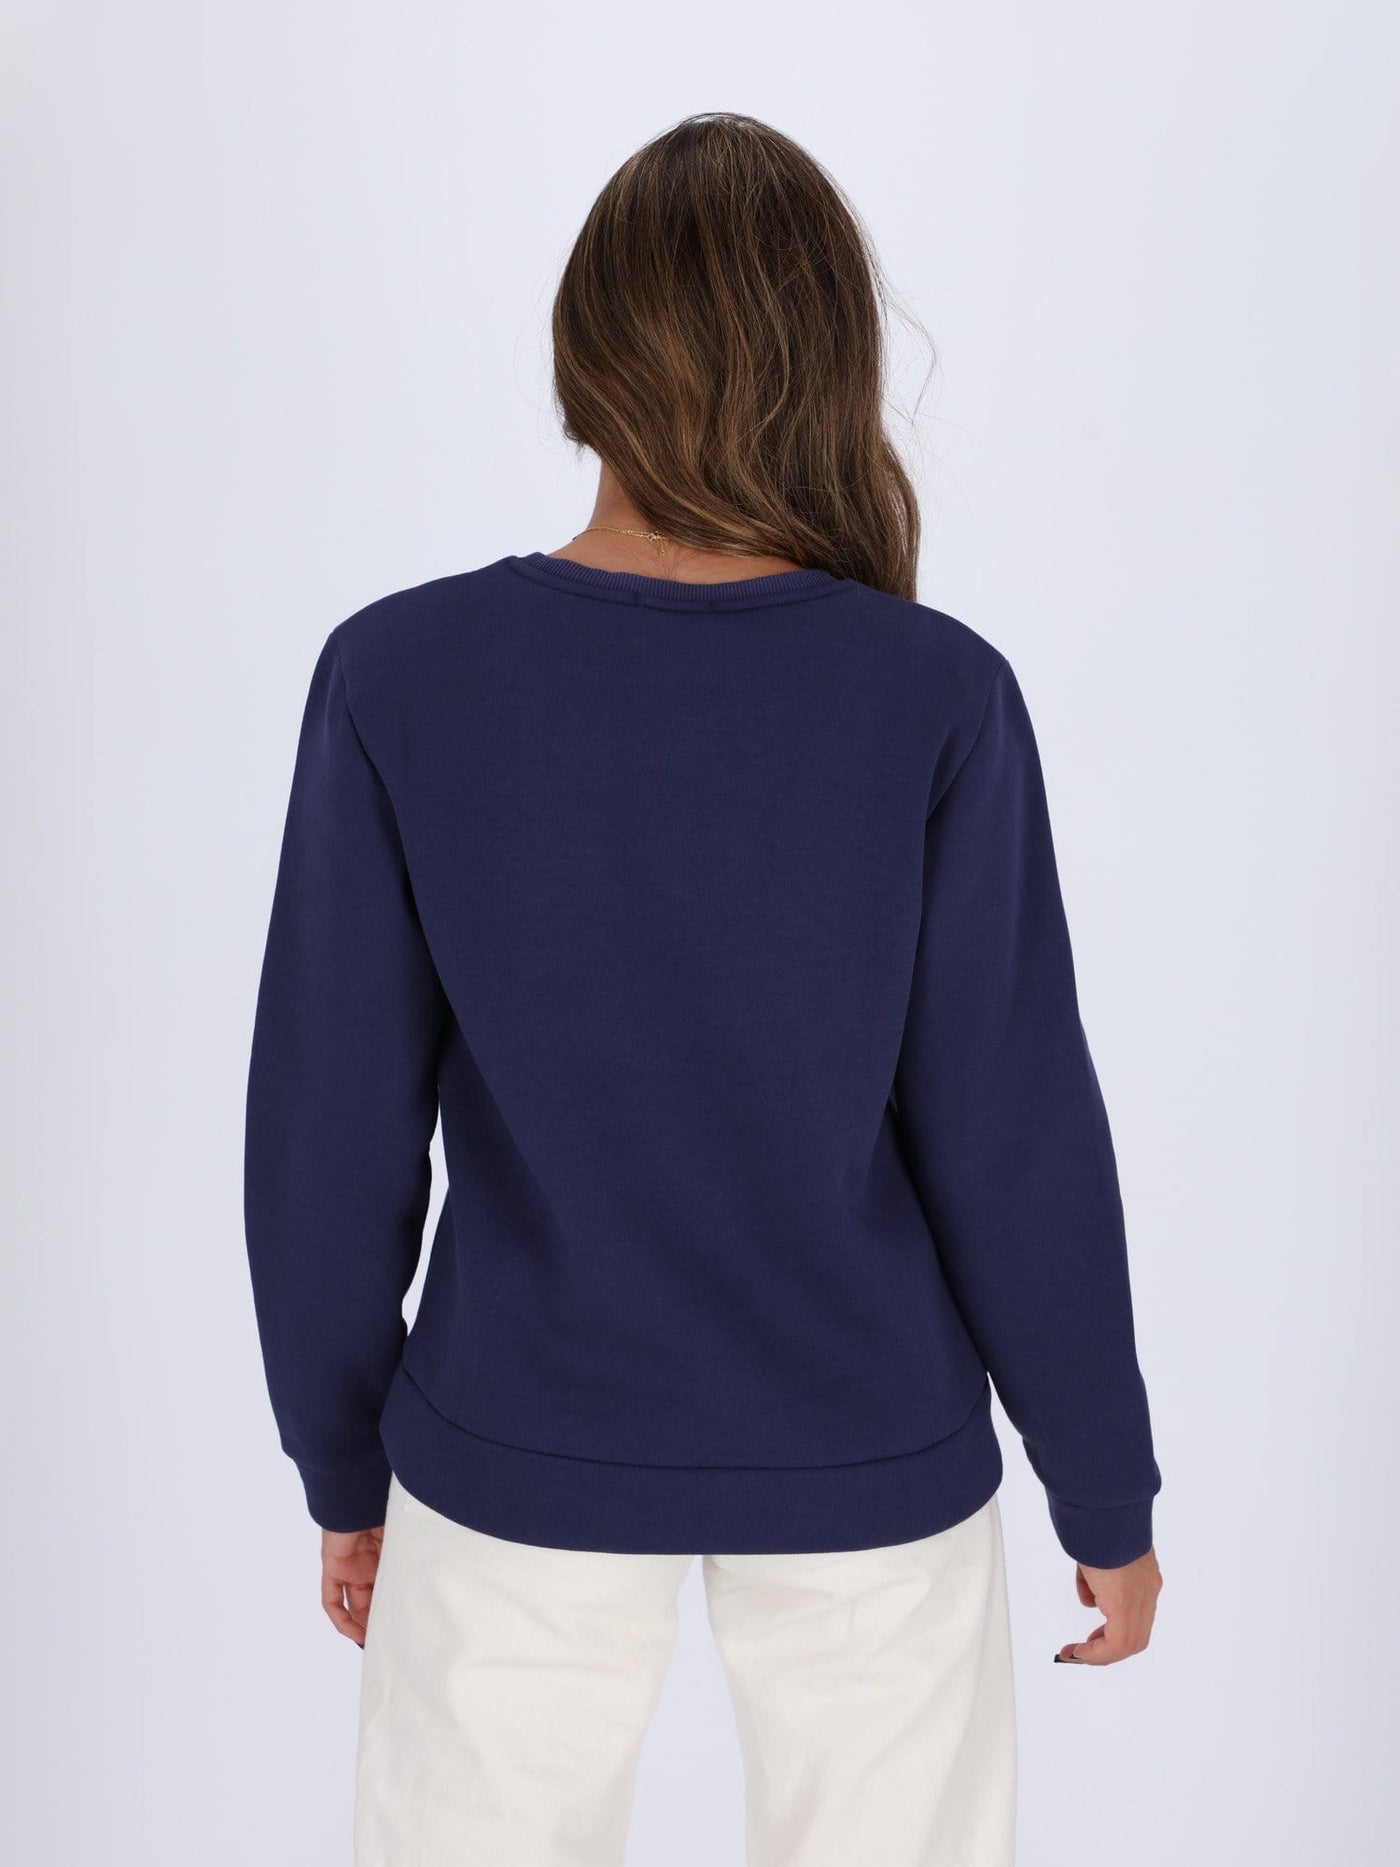 OR Knitwear Embroidered Sweatshirt